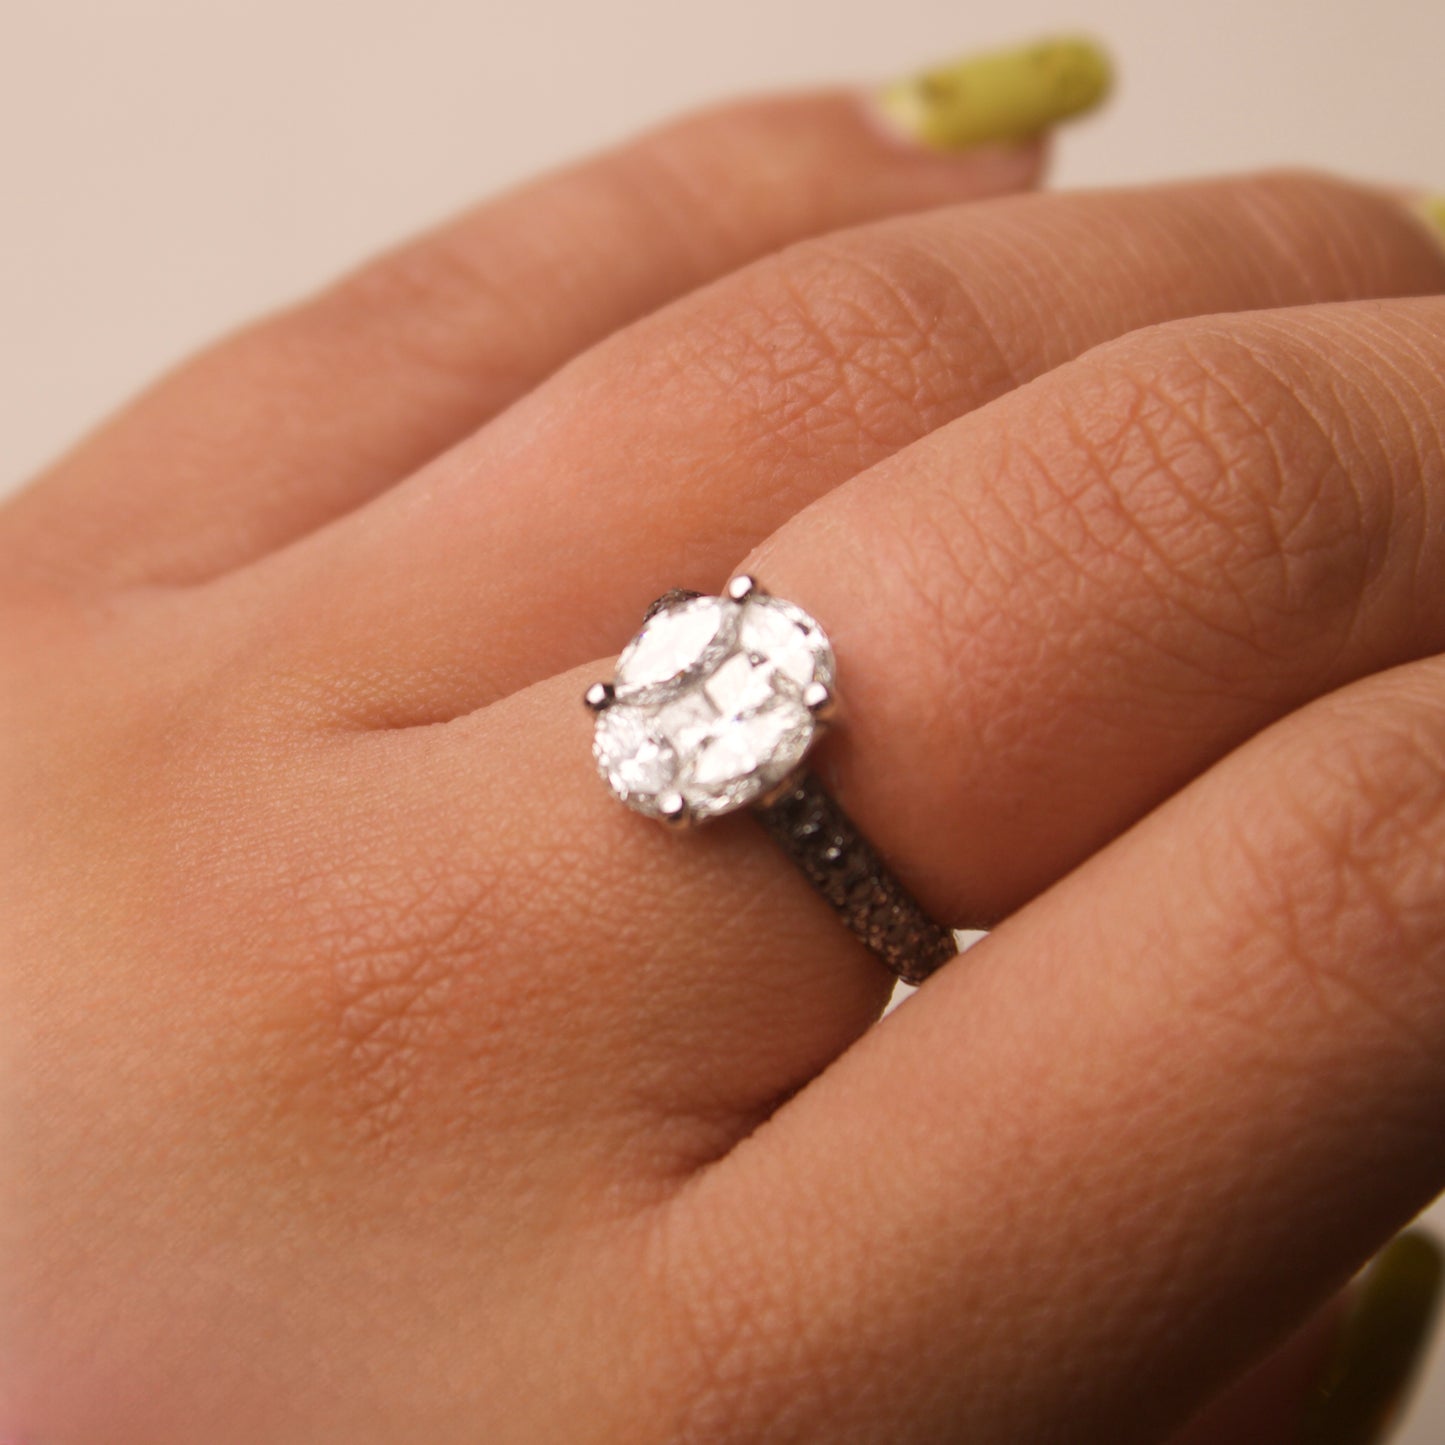 Nero Ovale Diamond Ring on a finger